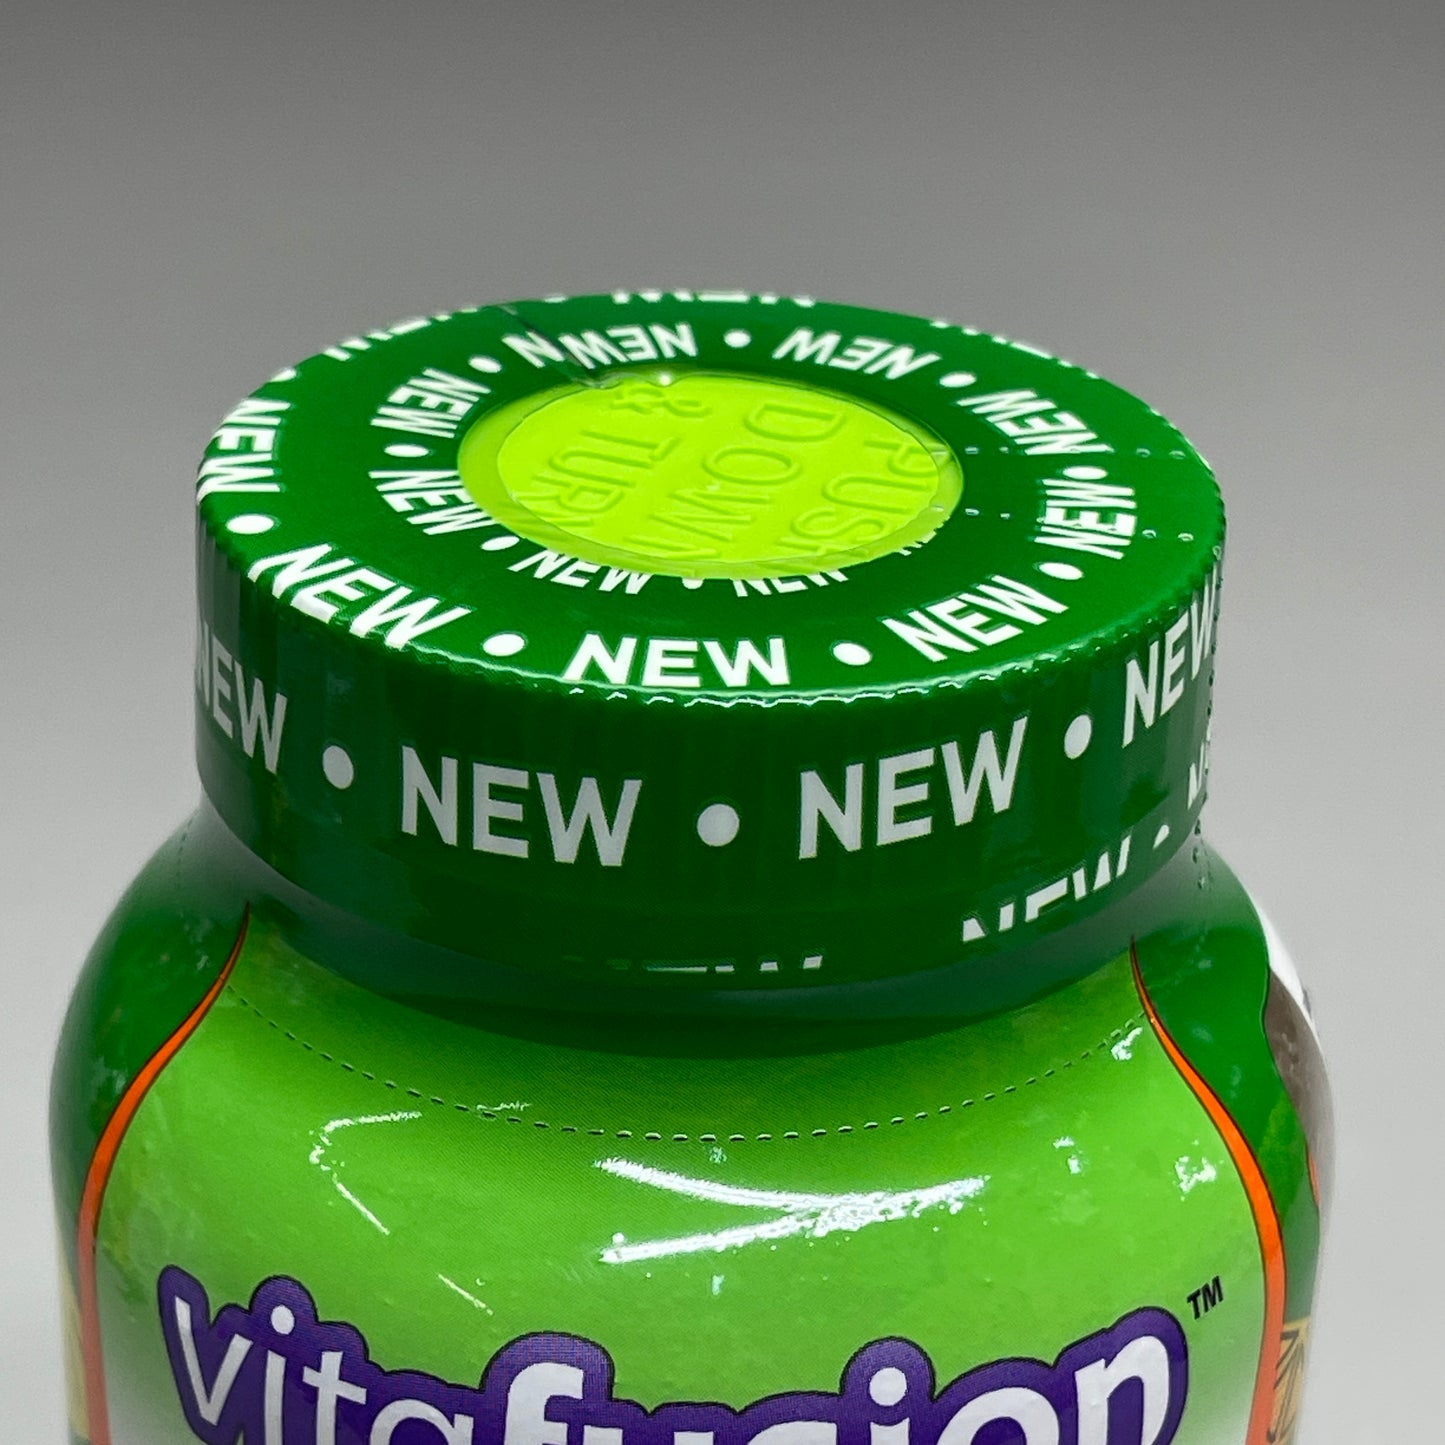 VITAFUSION 3-PACK! Power C Extra Strength Gummies for Everyday Health Gummies 92 Gummies BB 06/24